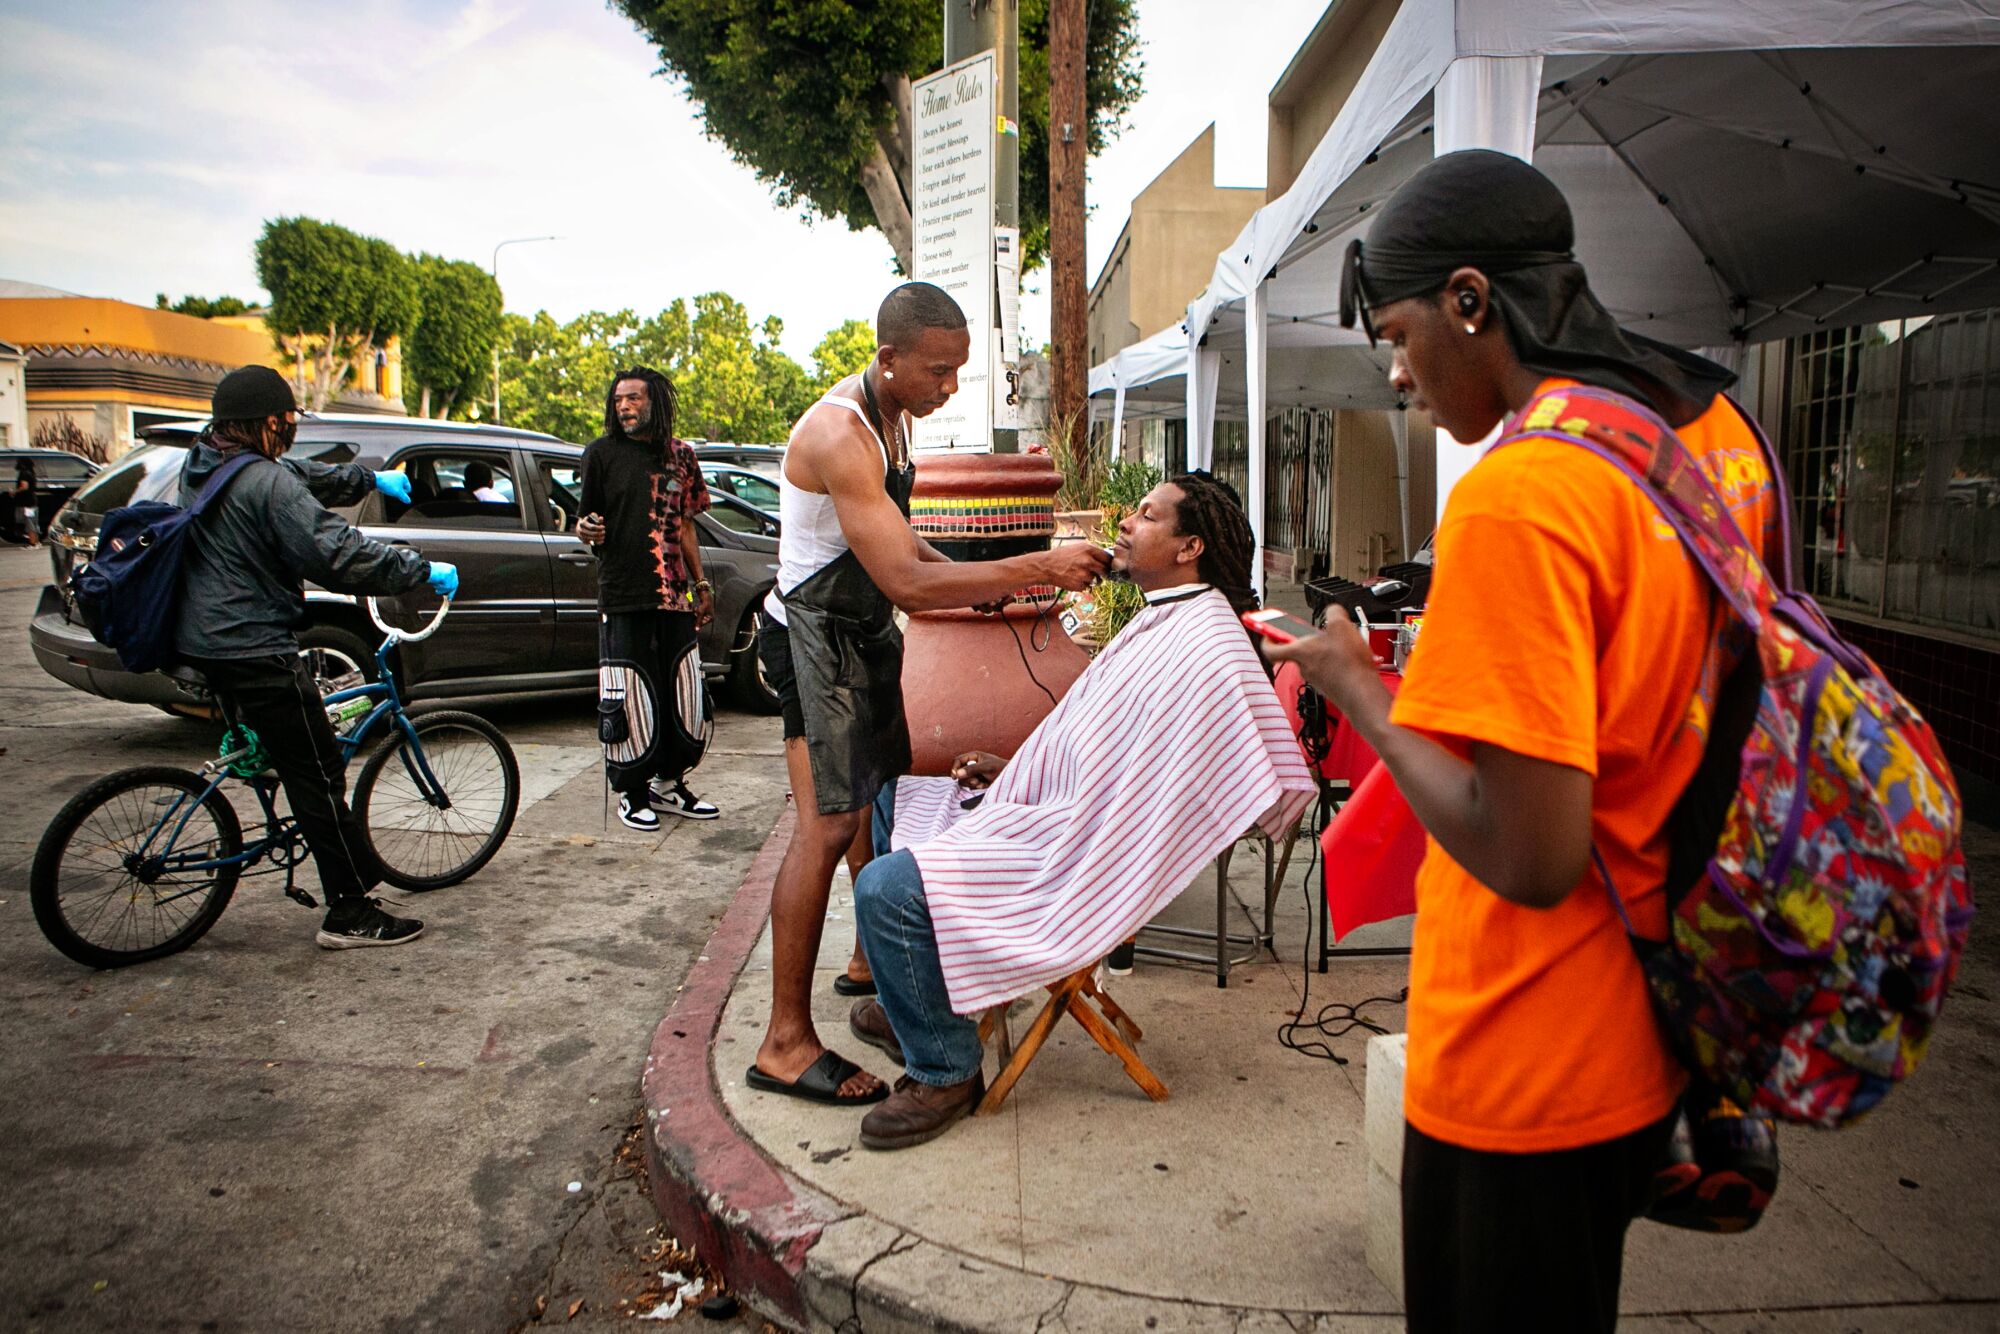 June 15: Jacket Rashad gives Rashad Karim a haircut on a street corner